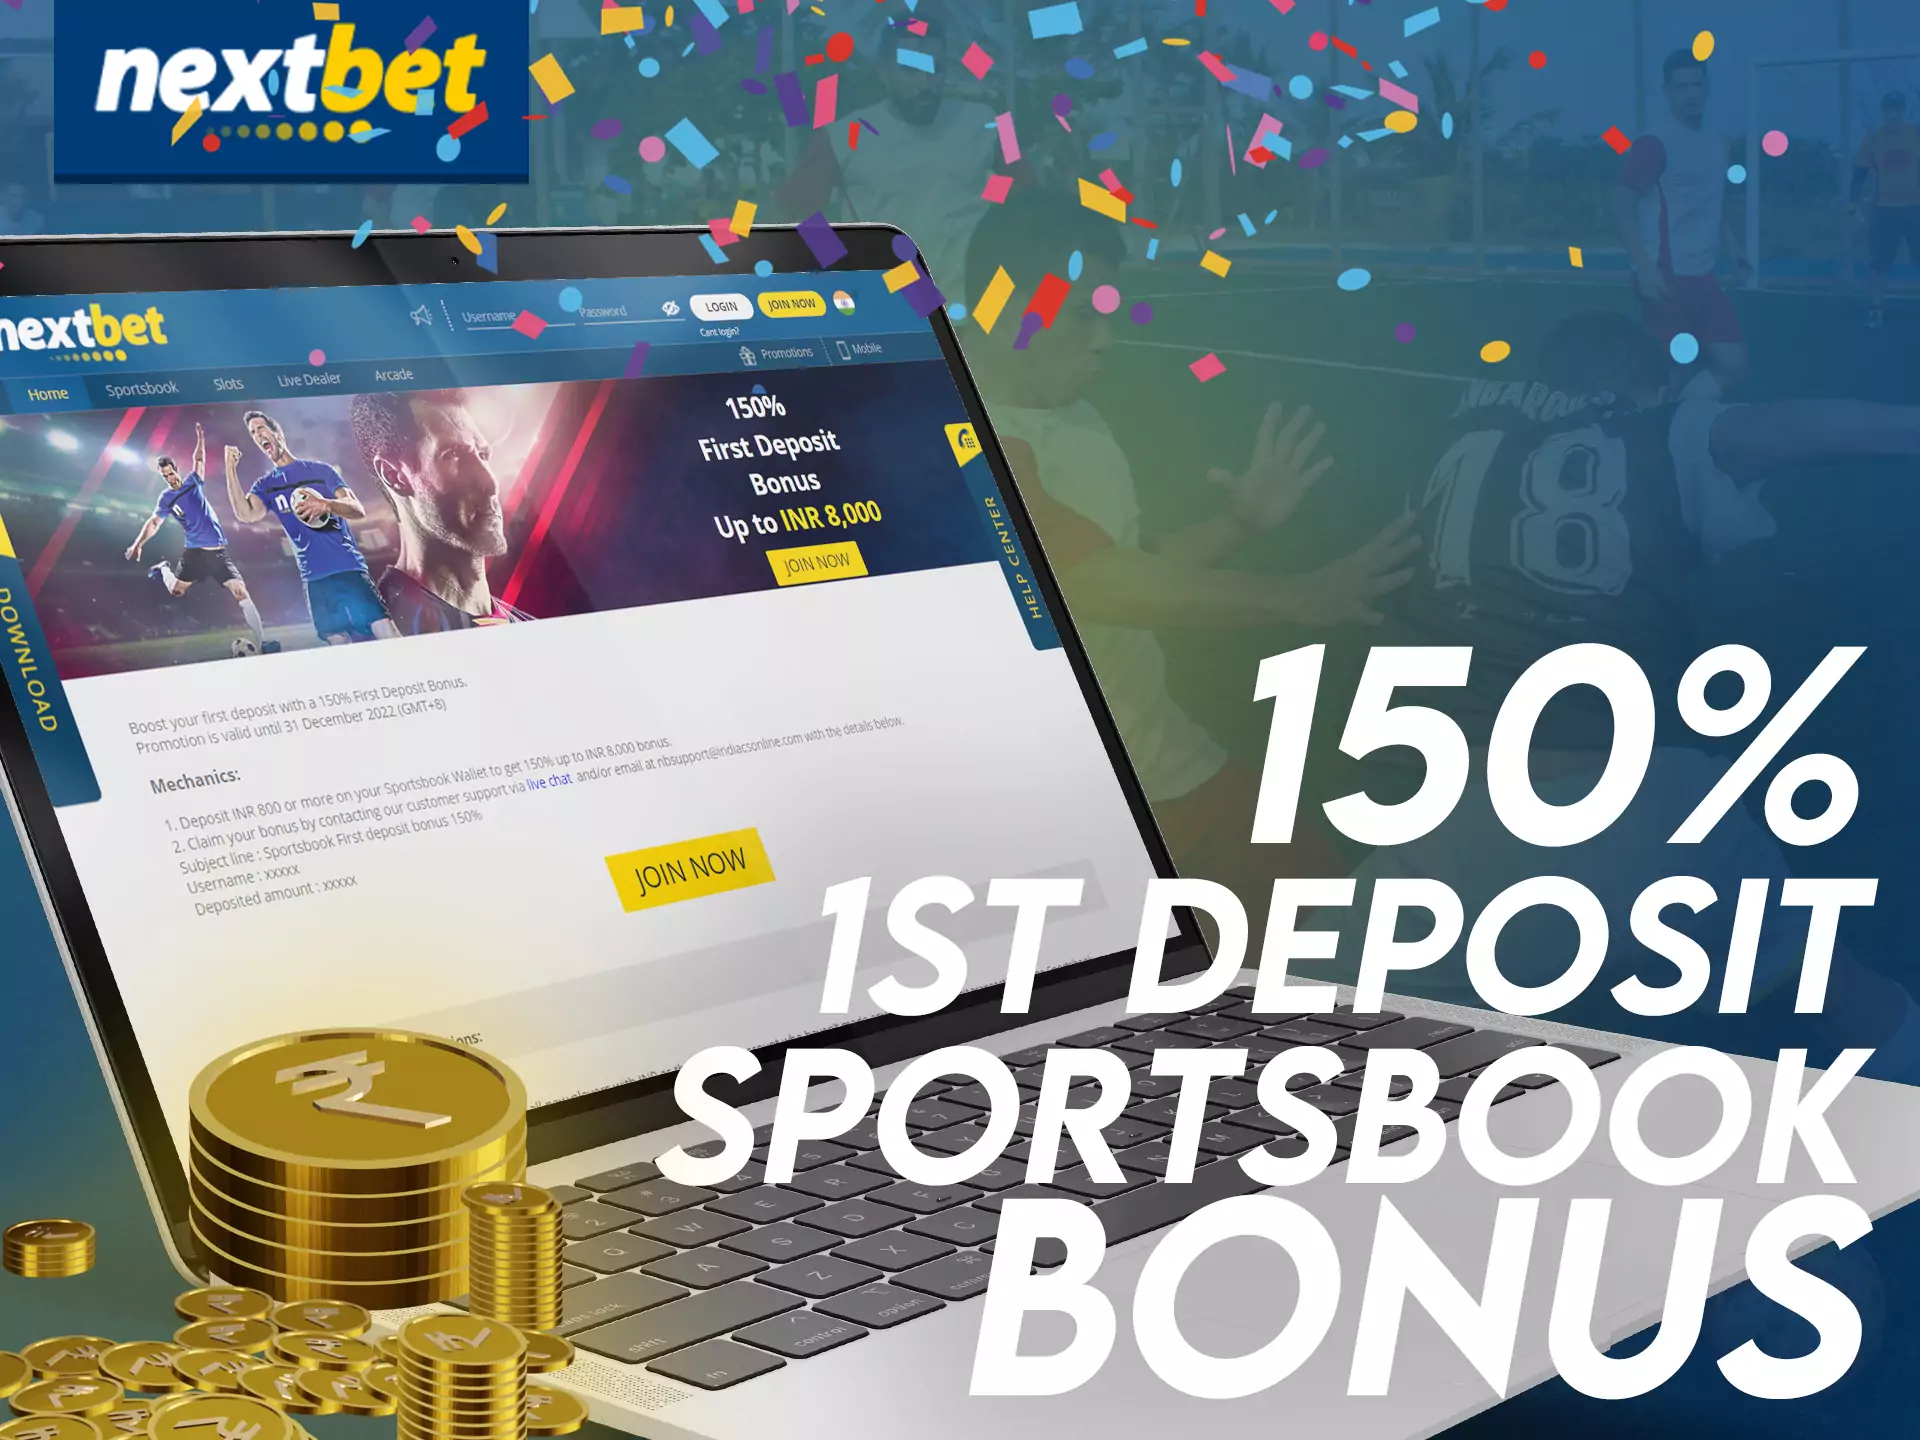 In Nextbet, get a special first deposit bonus for a sportsbook.